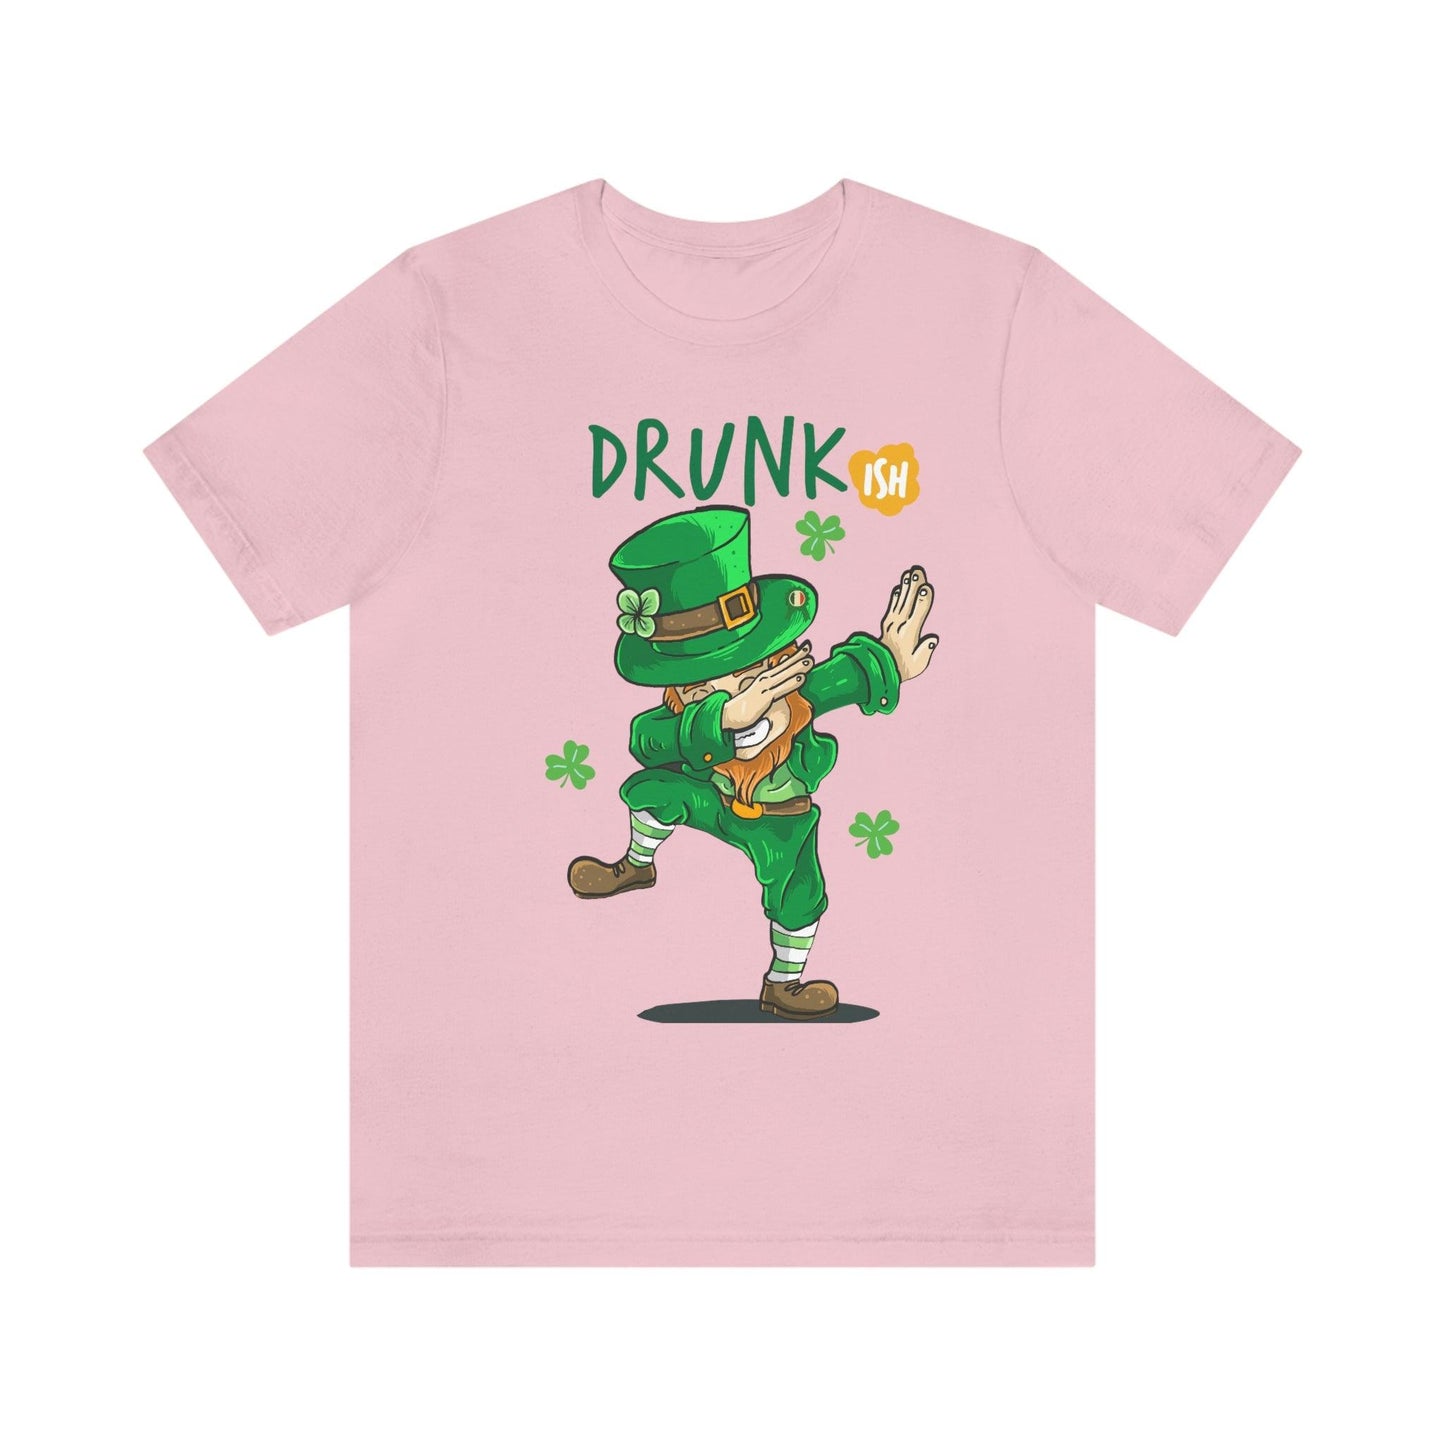 Funny St Patrick's Day shirt Lucky Shamrock shirt shenanigans shirt St Paddys day shirt - Day drinking shirt Drunk ish shirt - Giftsmojo